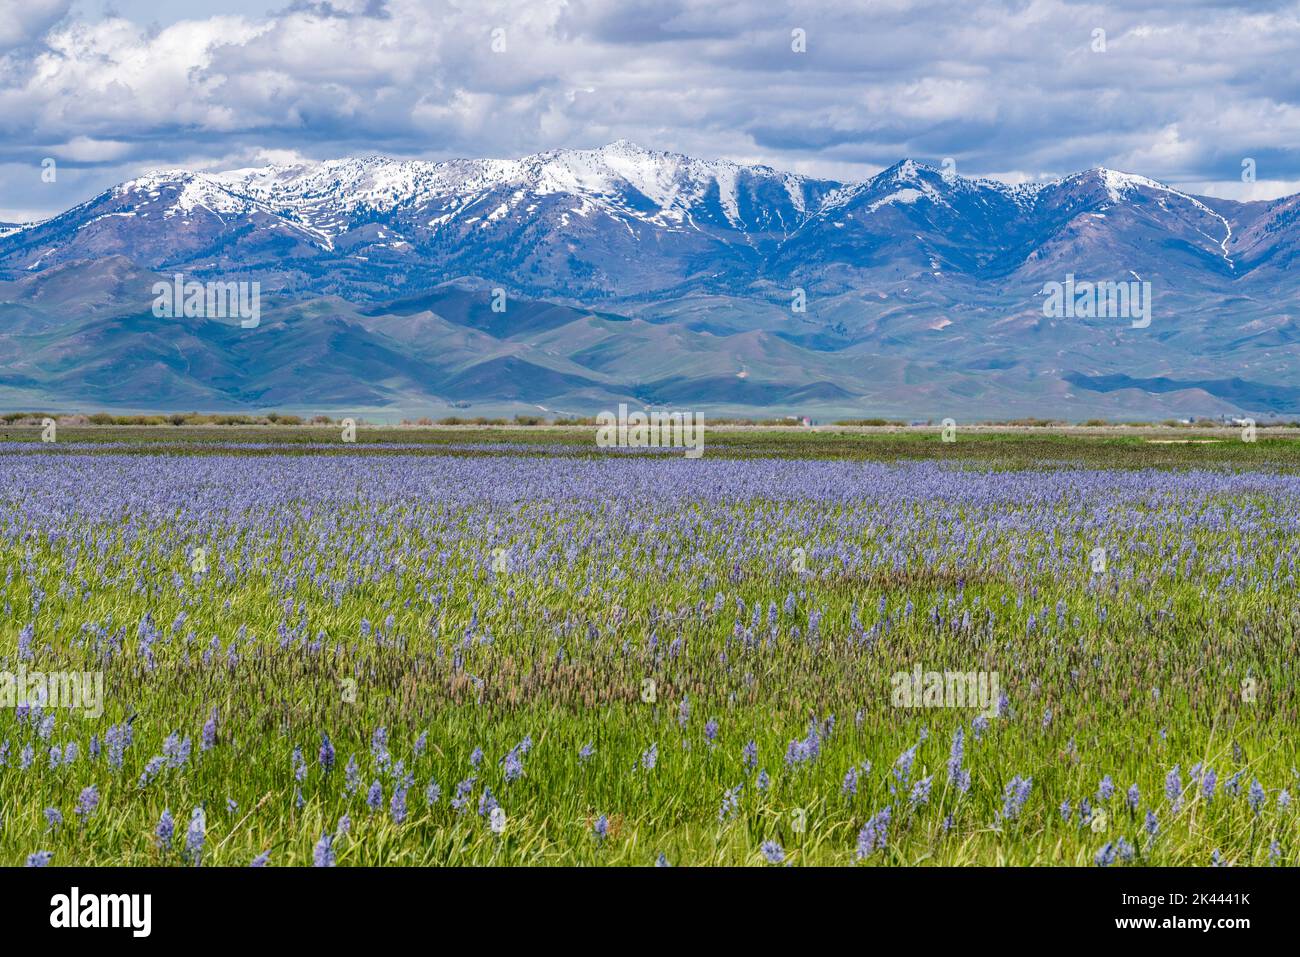 USA, Idaho, Fairfield, Felder voller Kamas mit Soldier Mountain im Hintergrund Stockfoto